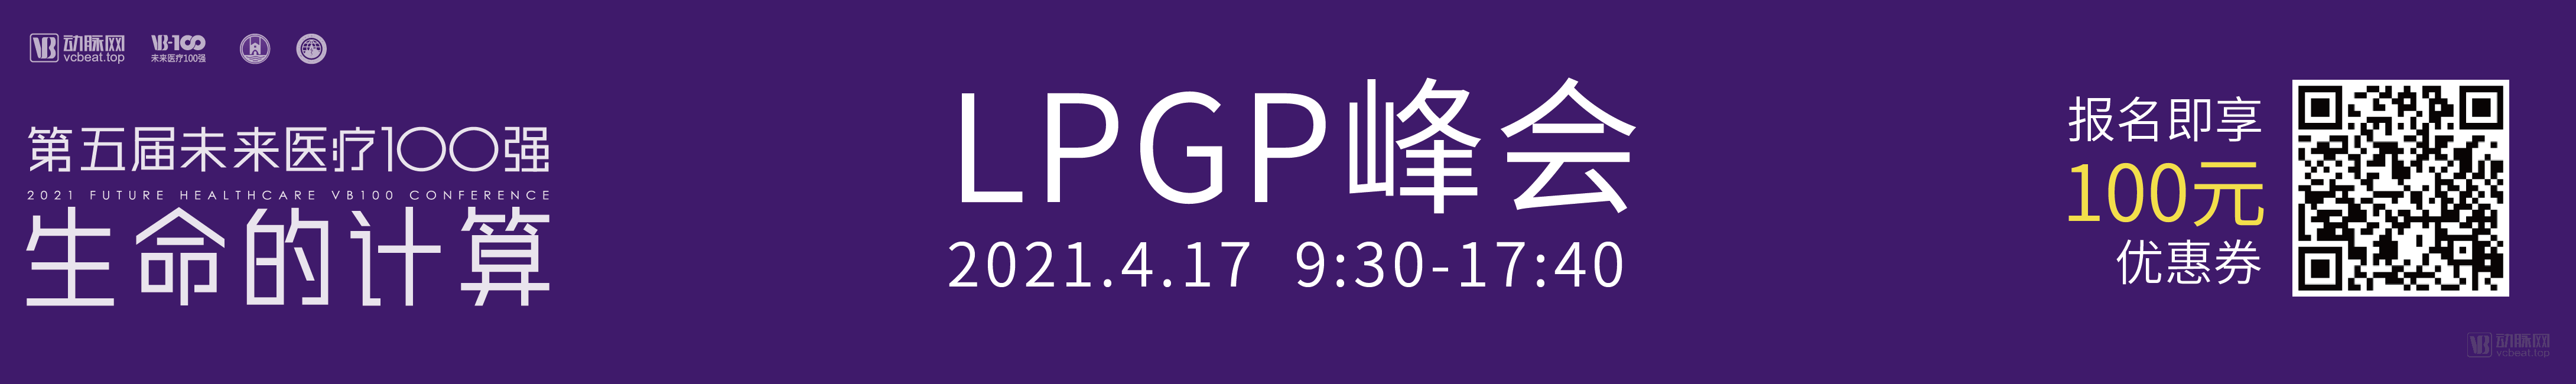 17LPGP峰会-11.png